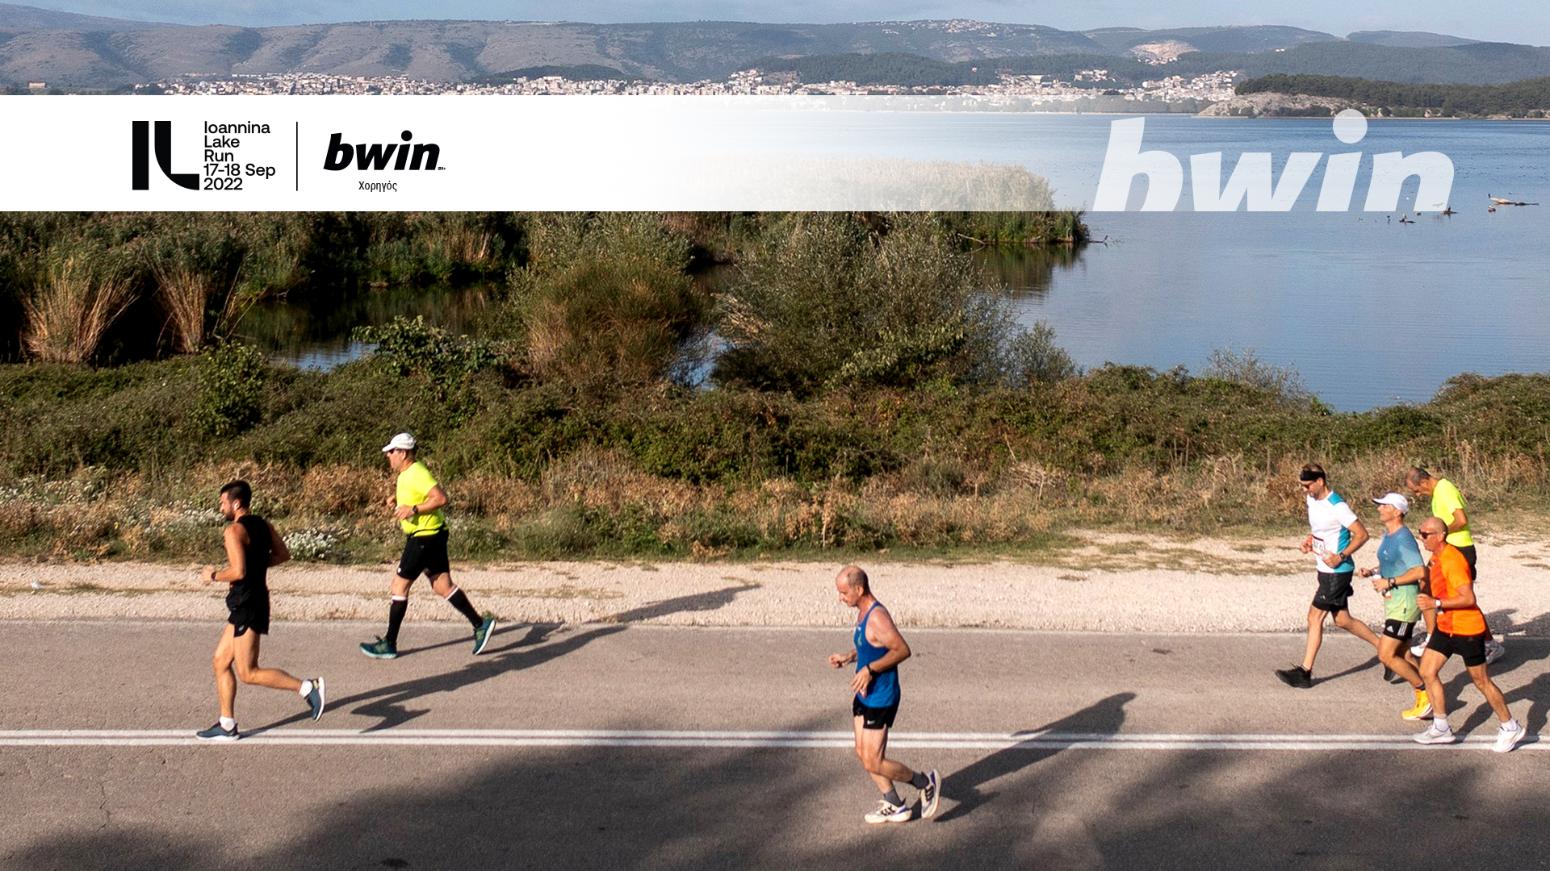 bwin: Τεράστια συμμετοχή στο Ioannina Lake Run